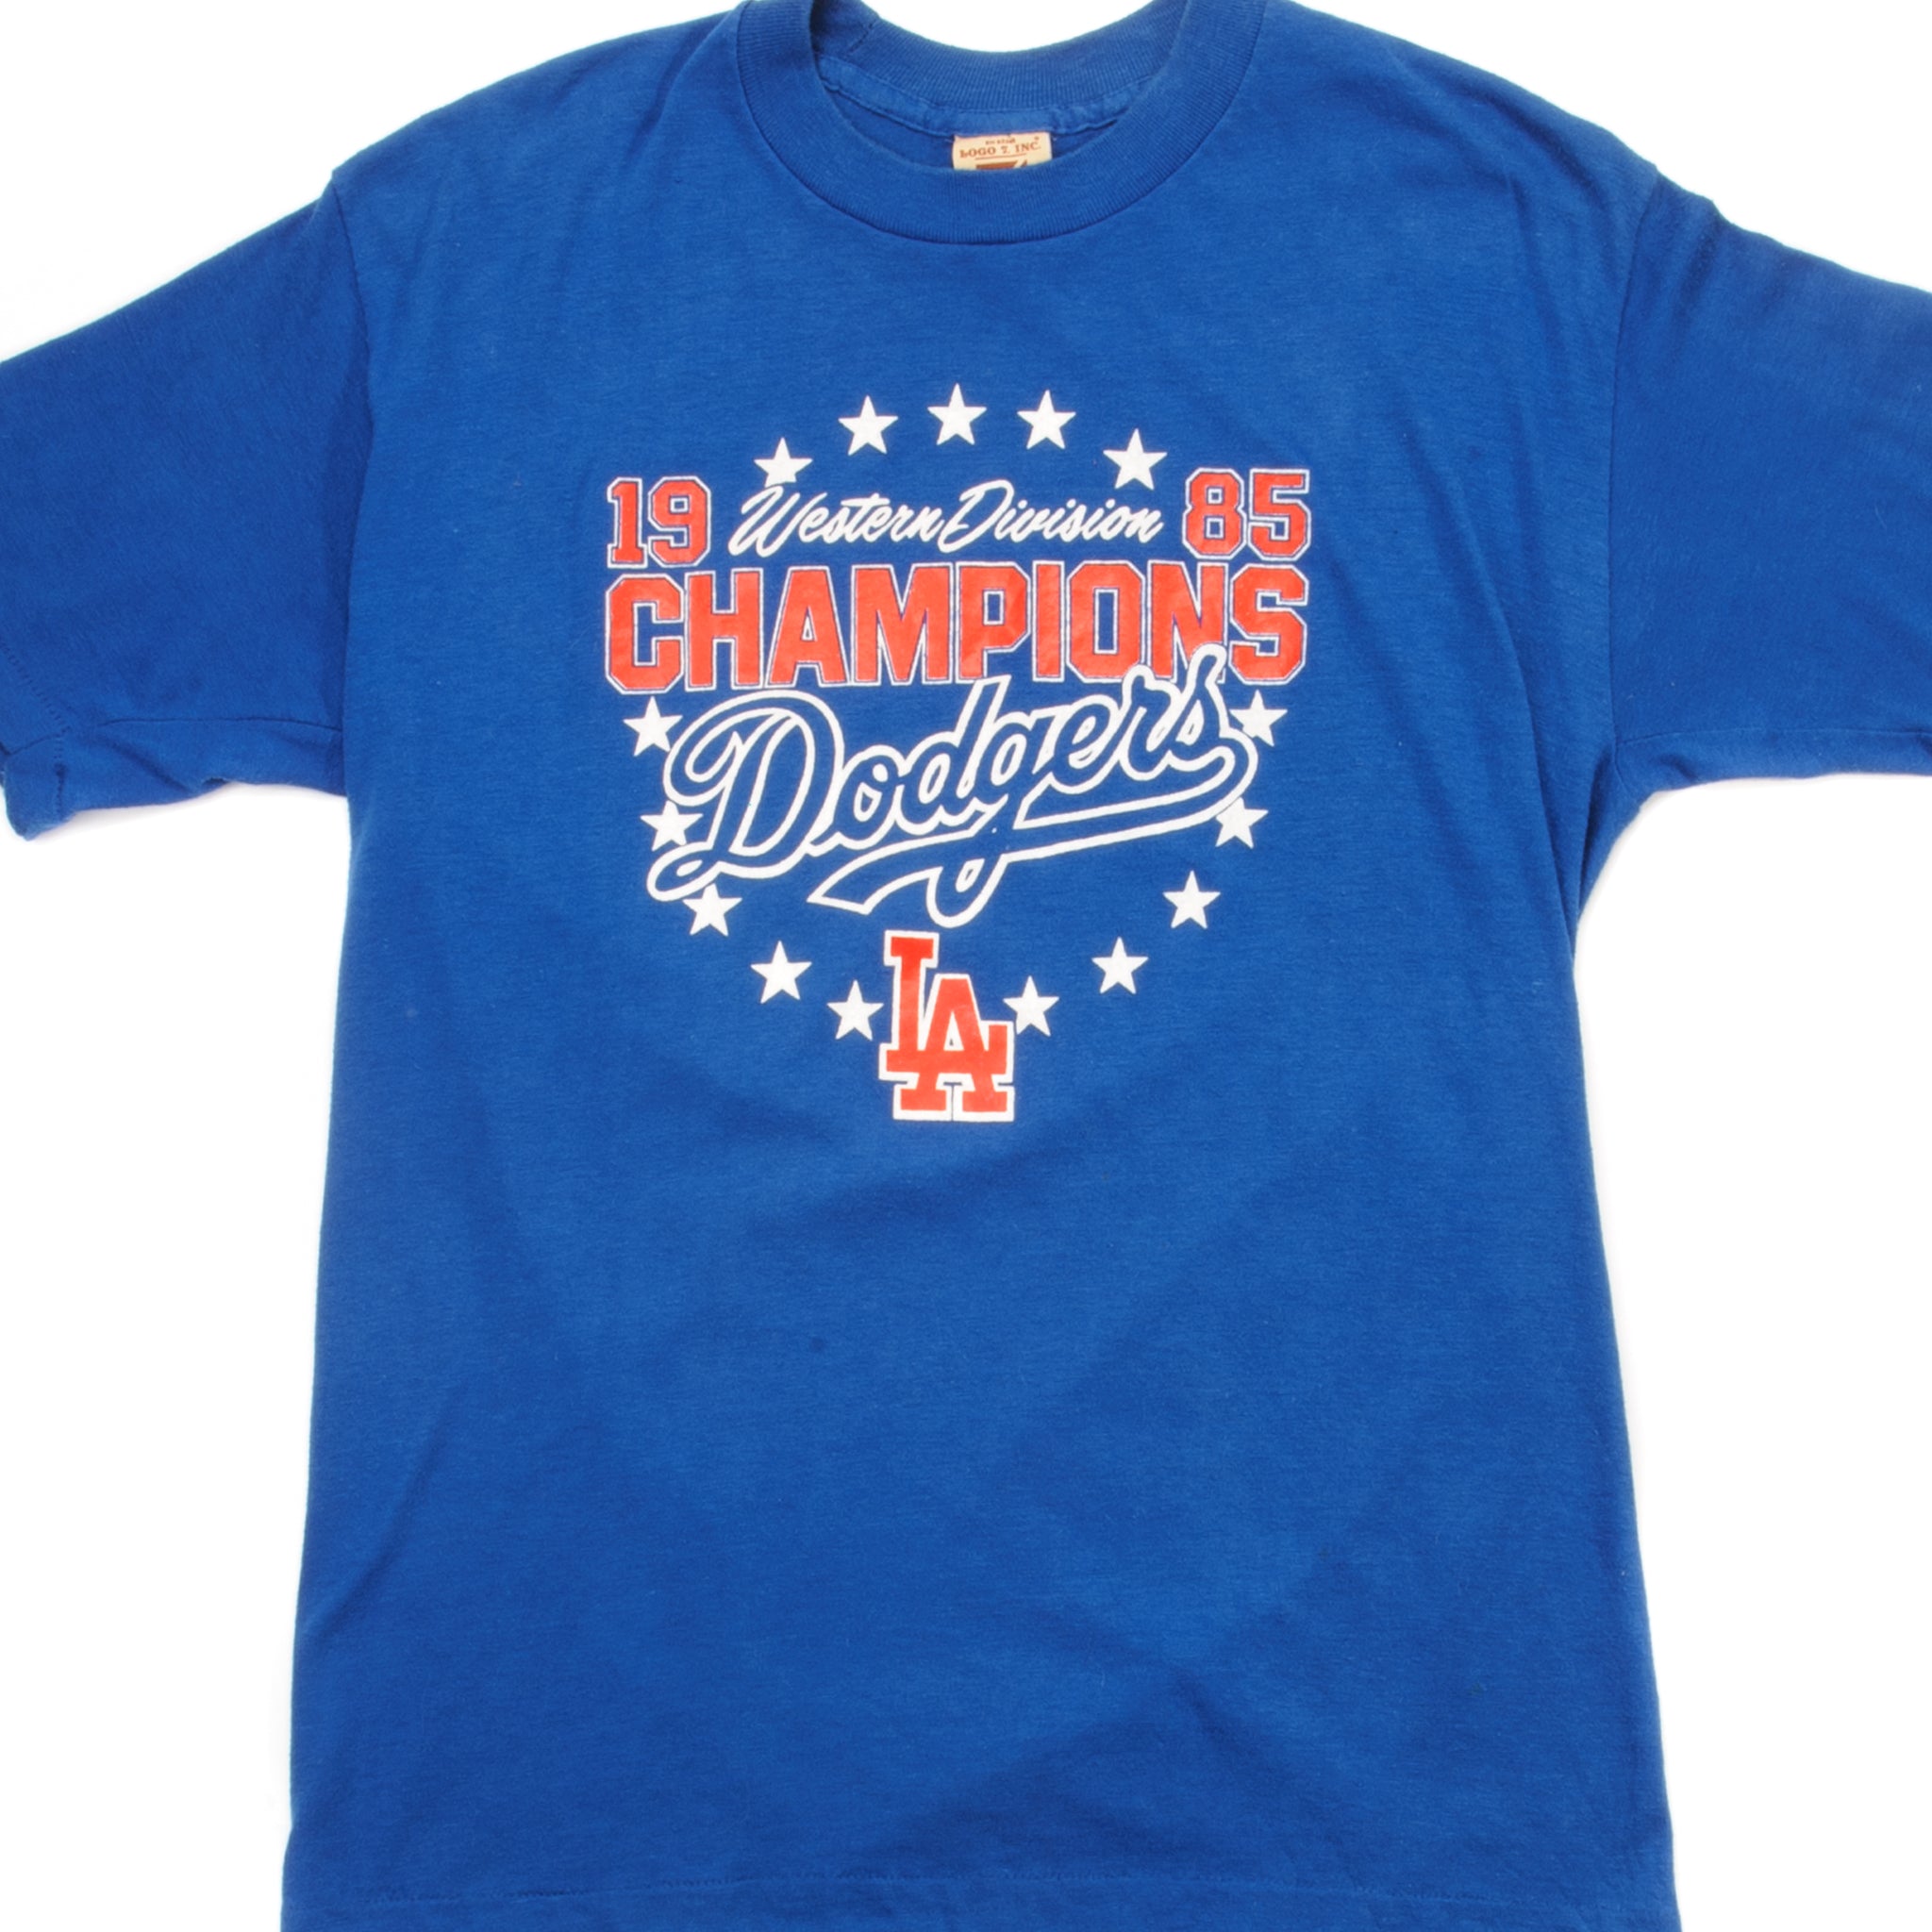 Dodgers - Baseball – Big League Shirts